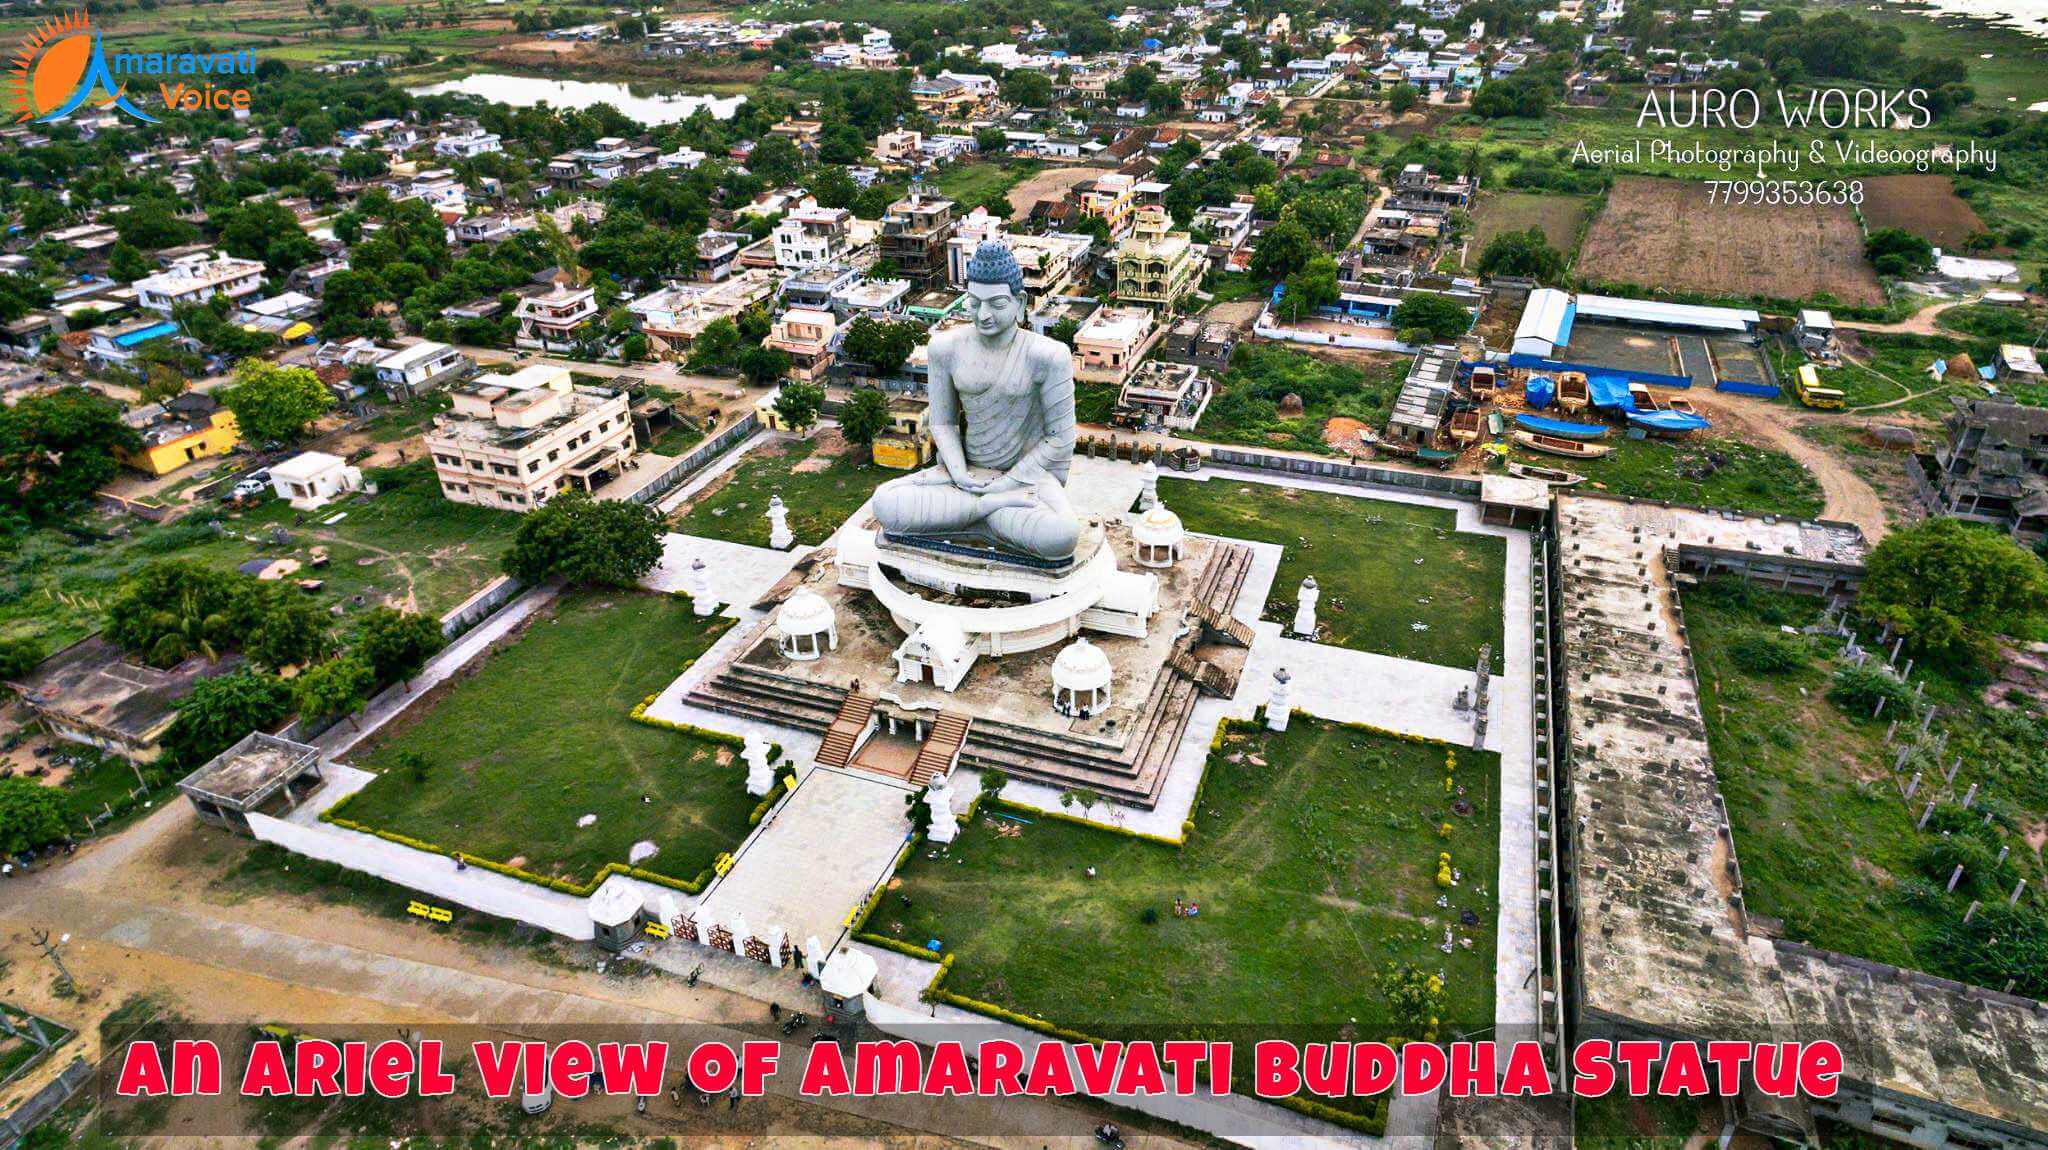 An Arial View of Buddha Statue in Amaravati